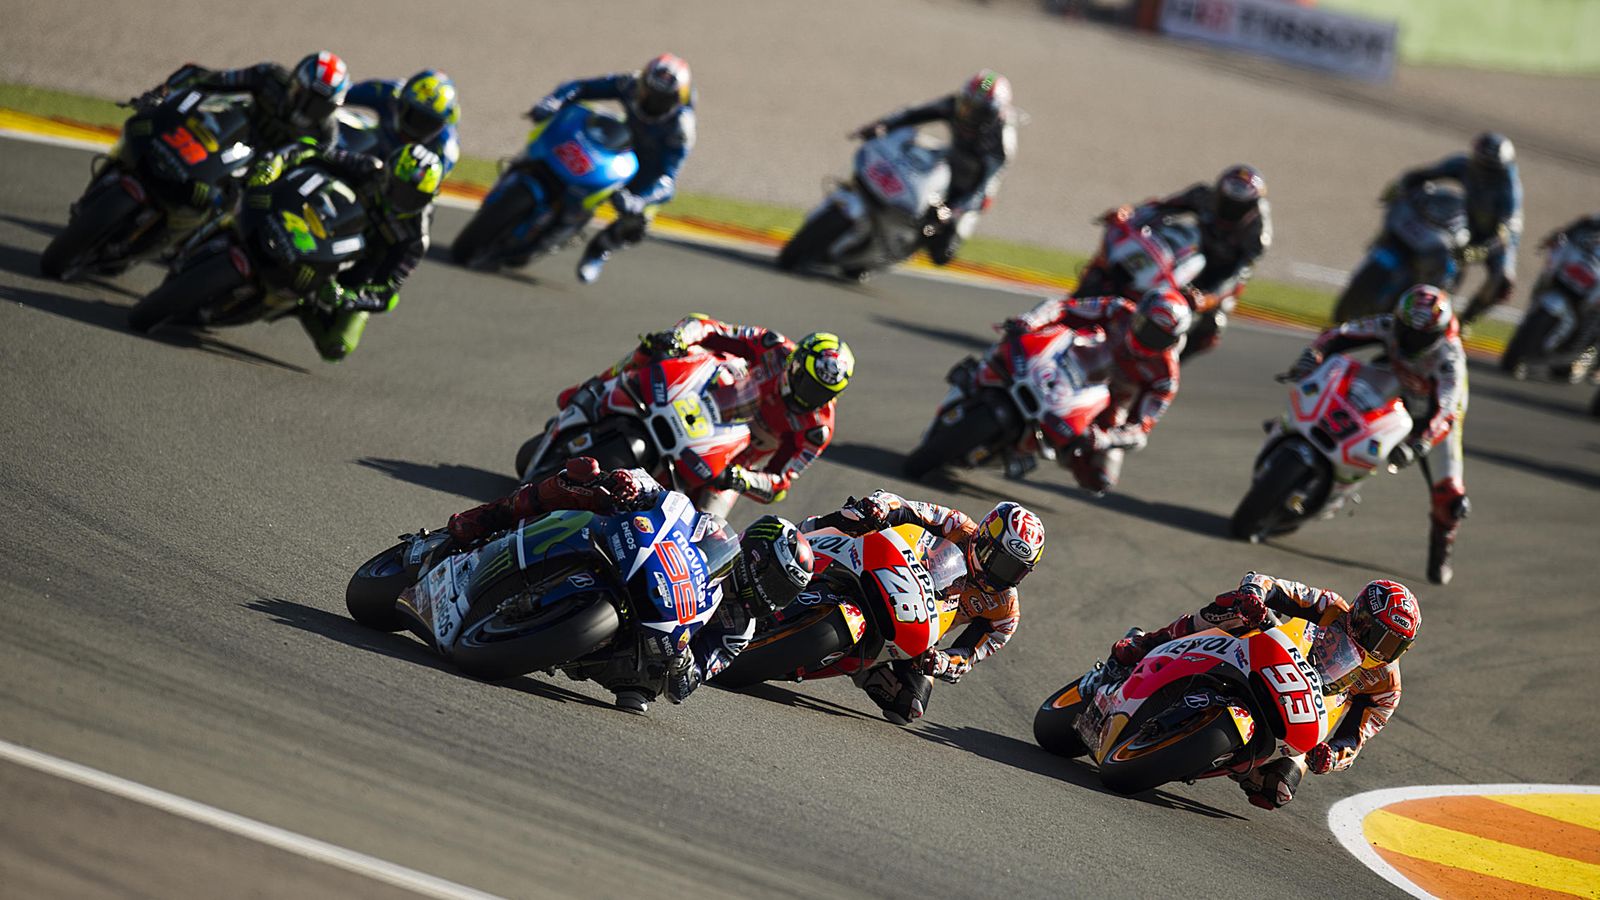 Foto: Dorna Sports es la encargada de organizar el Mundial de MotoGP (Cordon Press).